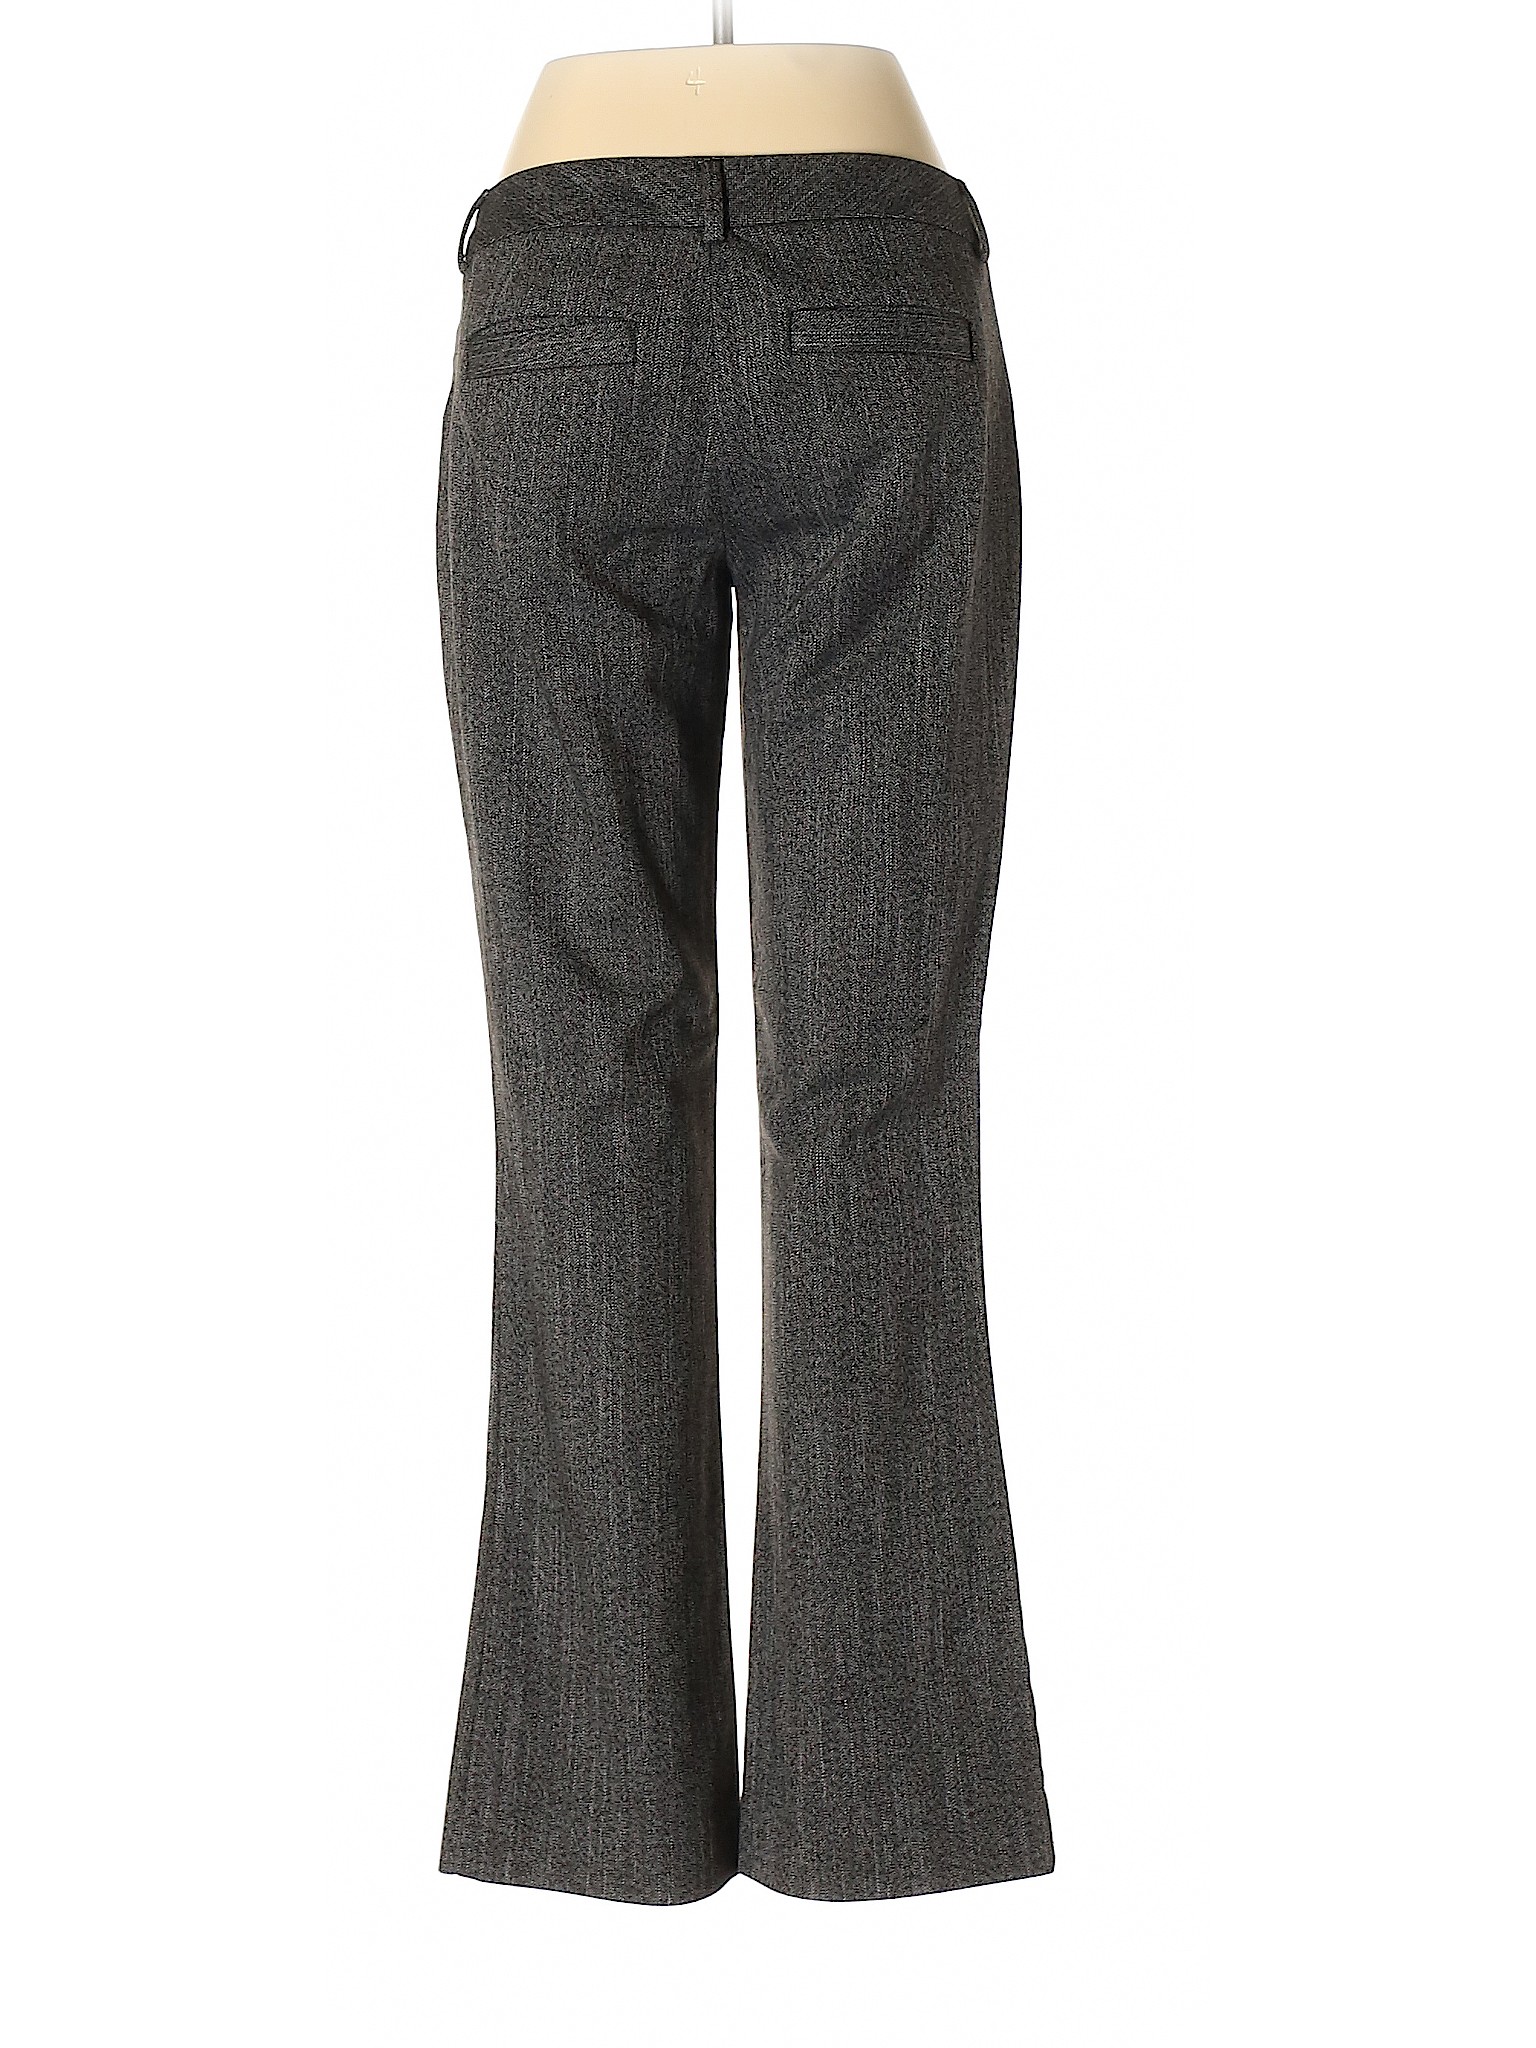 Express Women Gray Dress Pants 2 | eBay